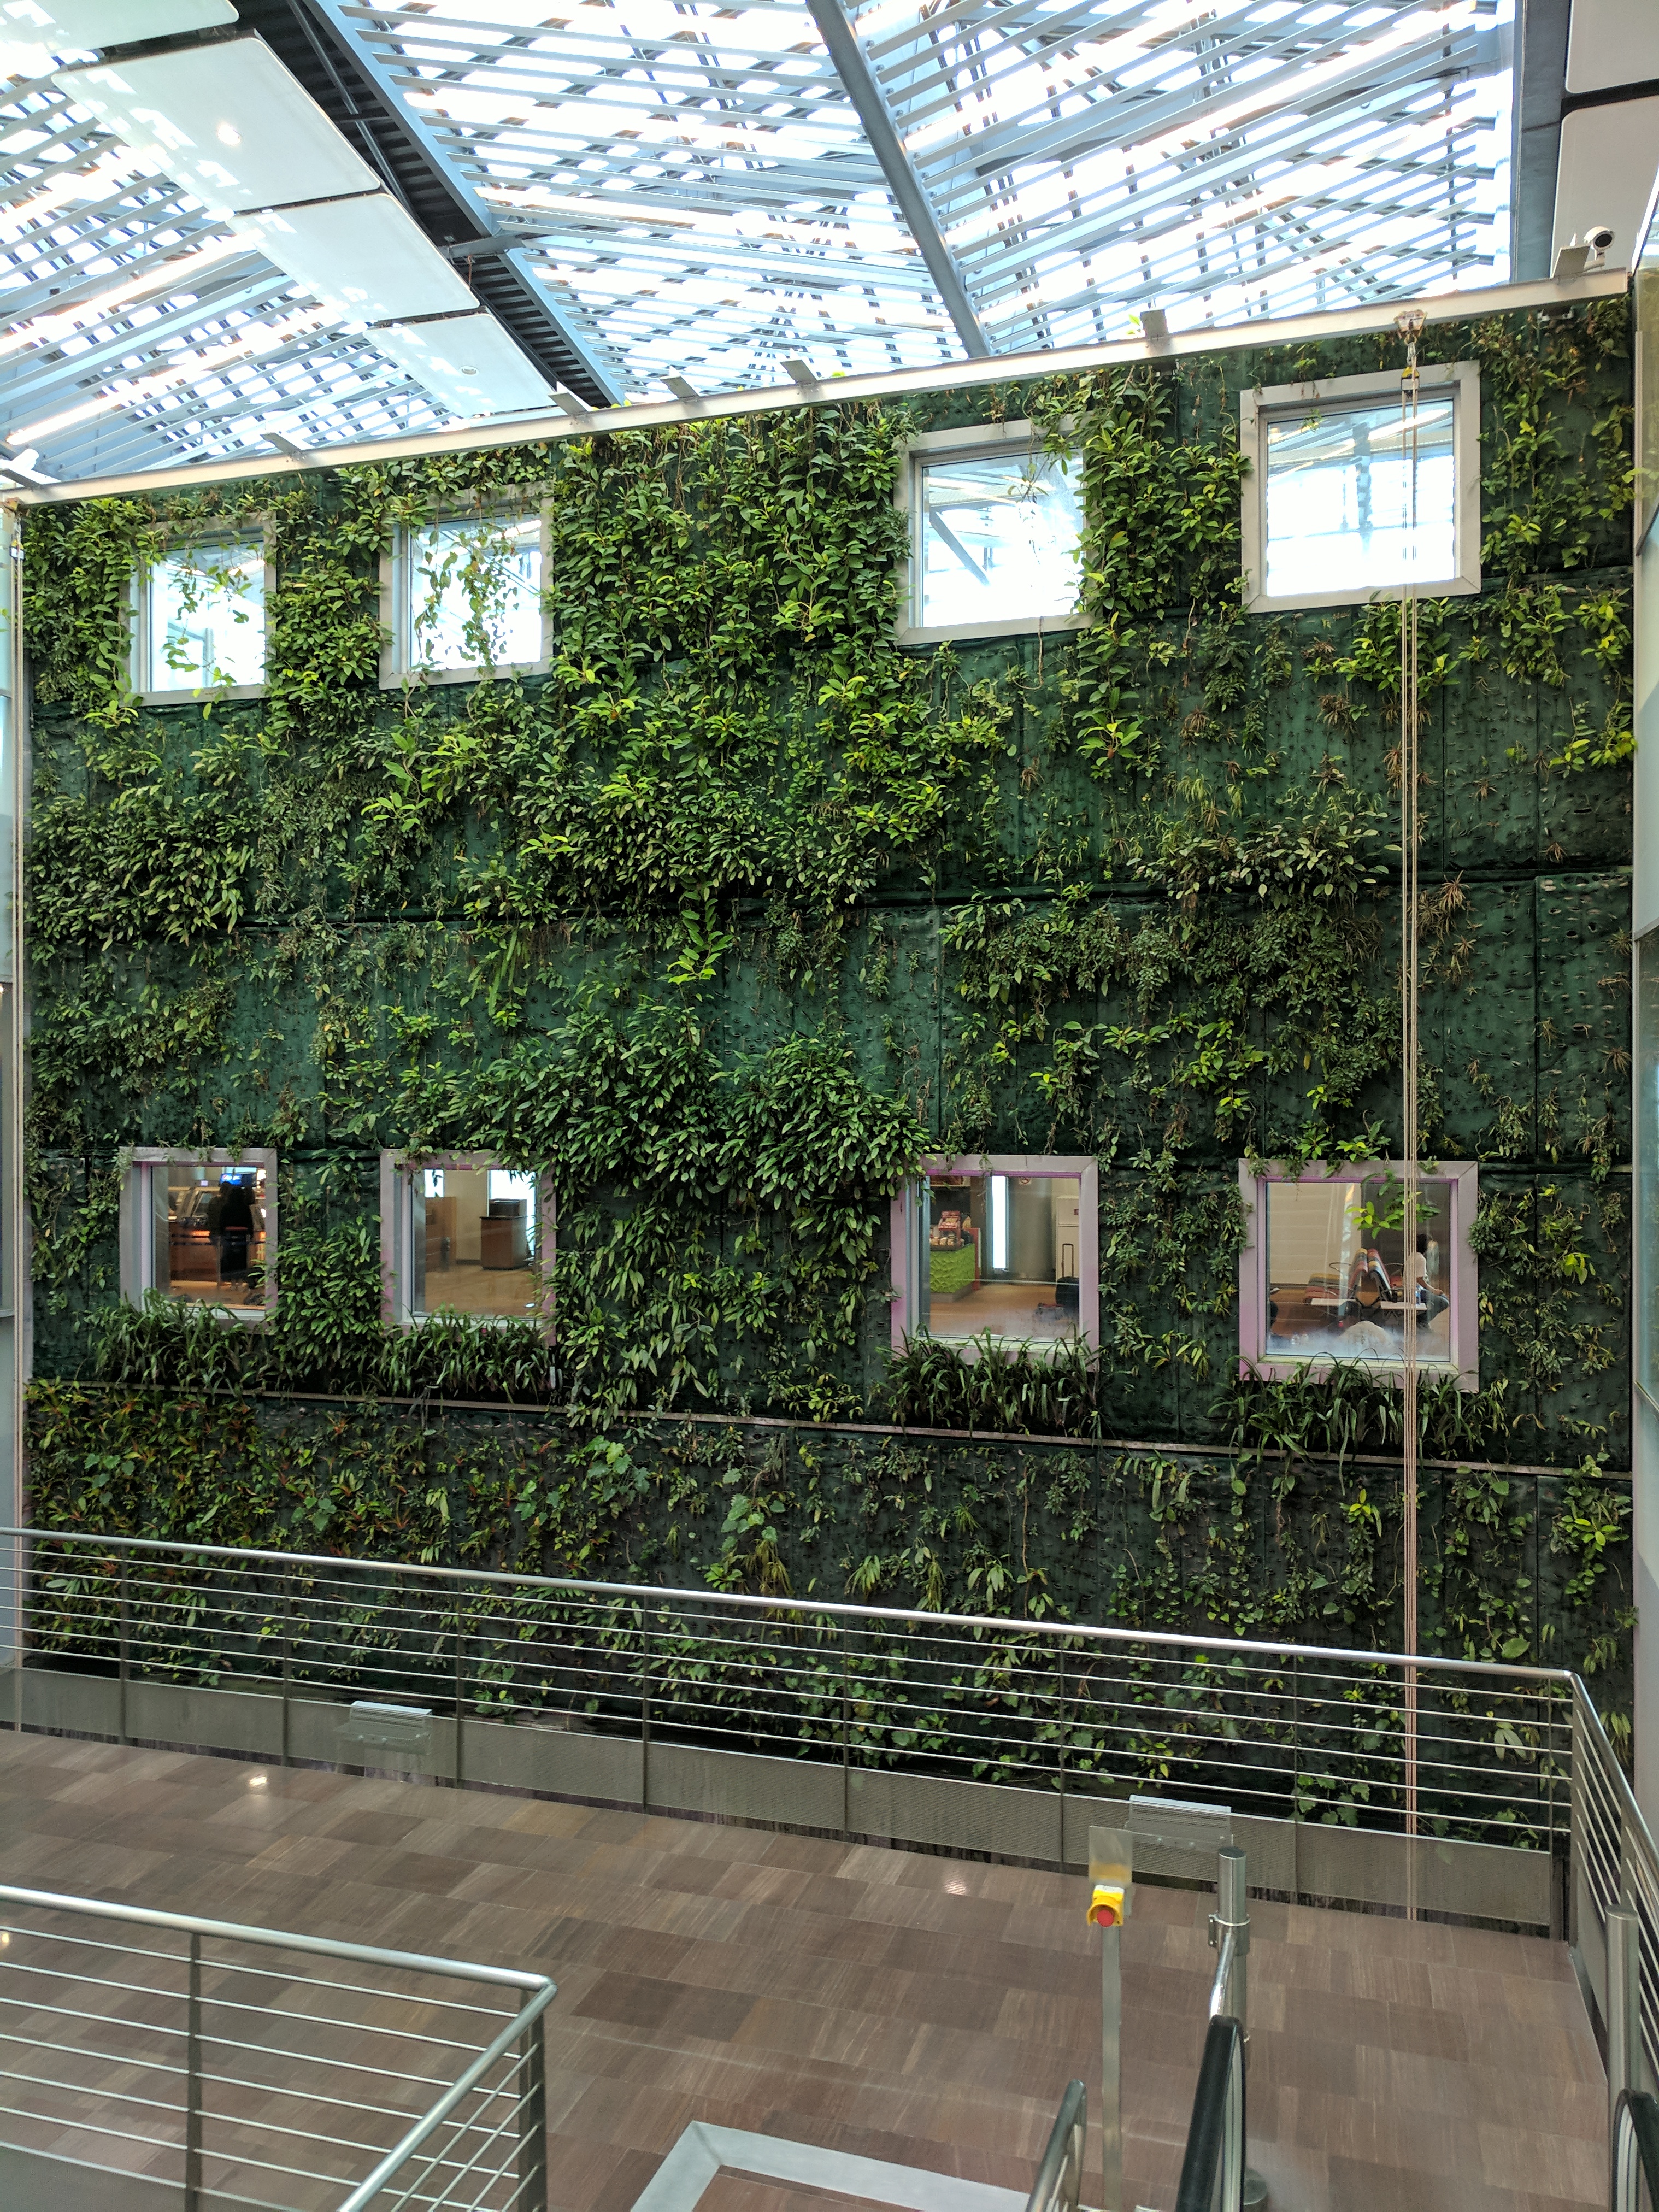 Green wall at the airport